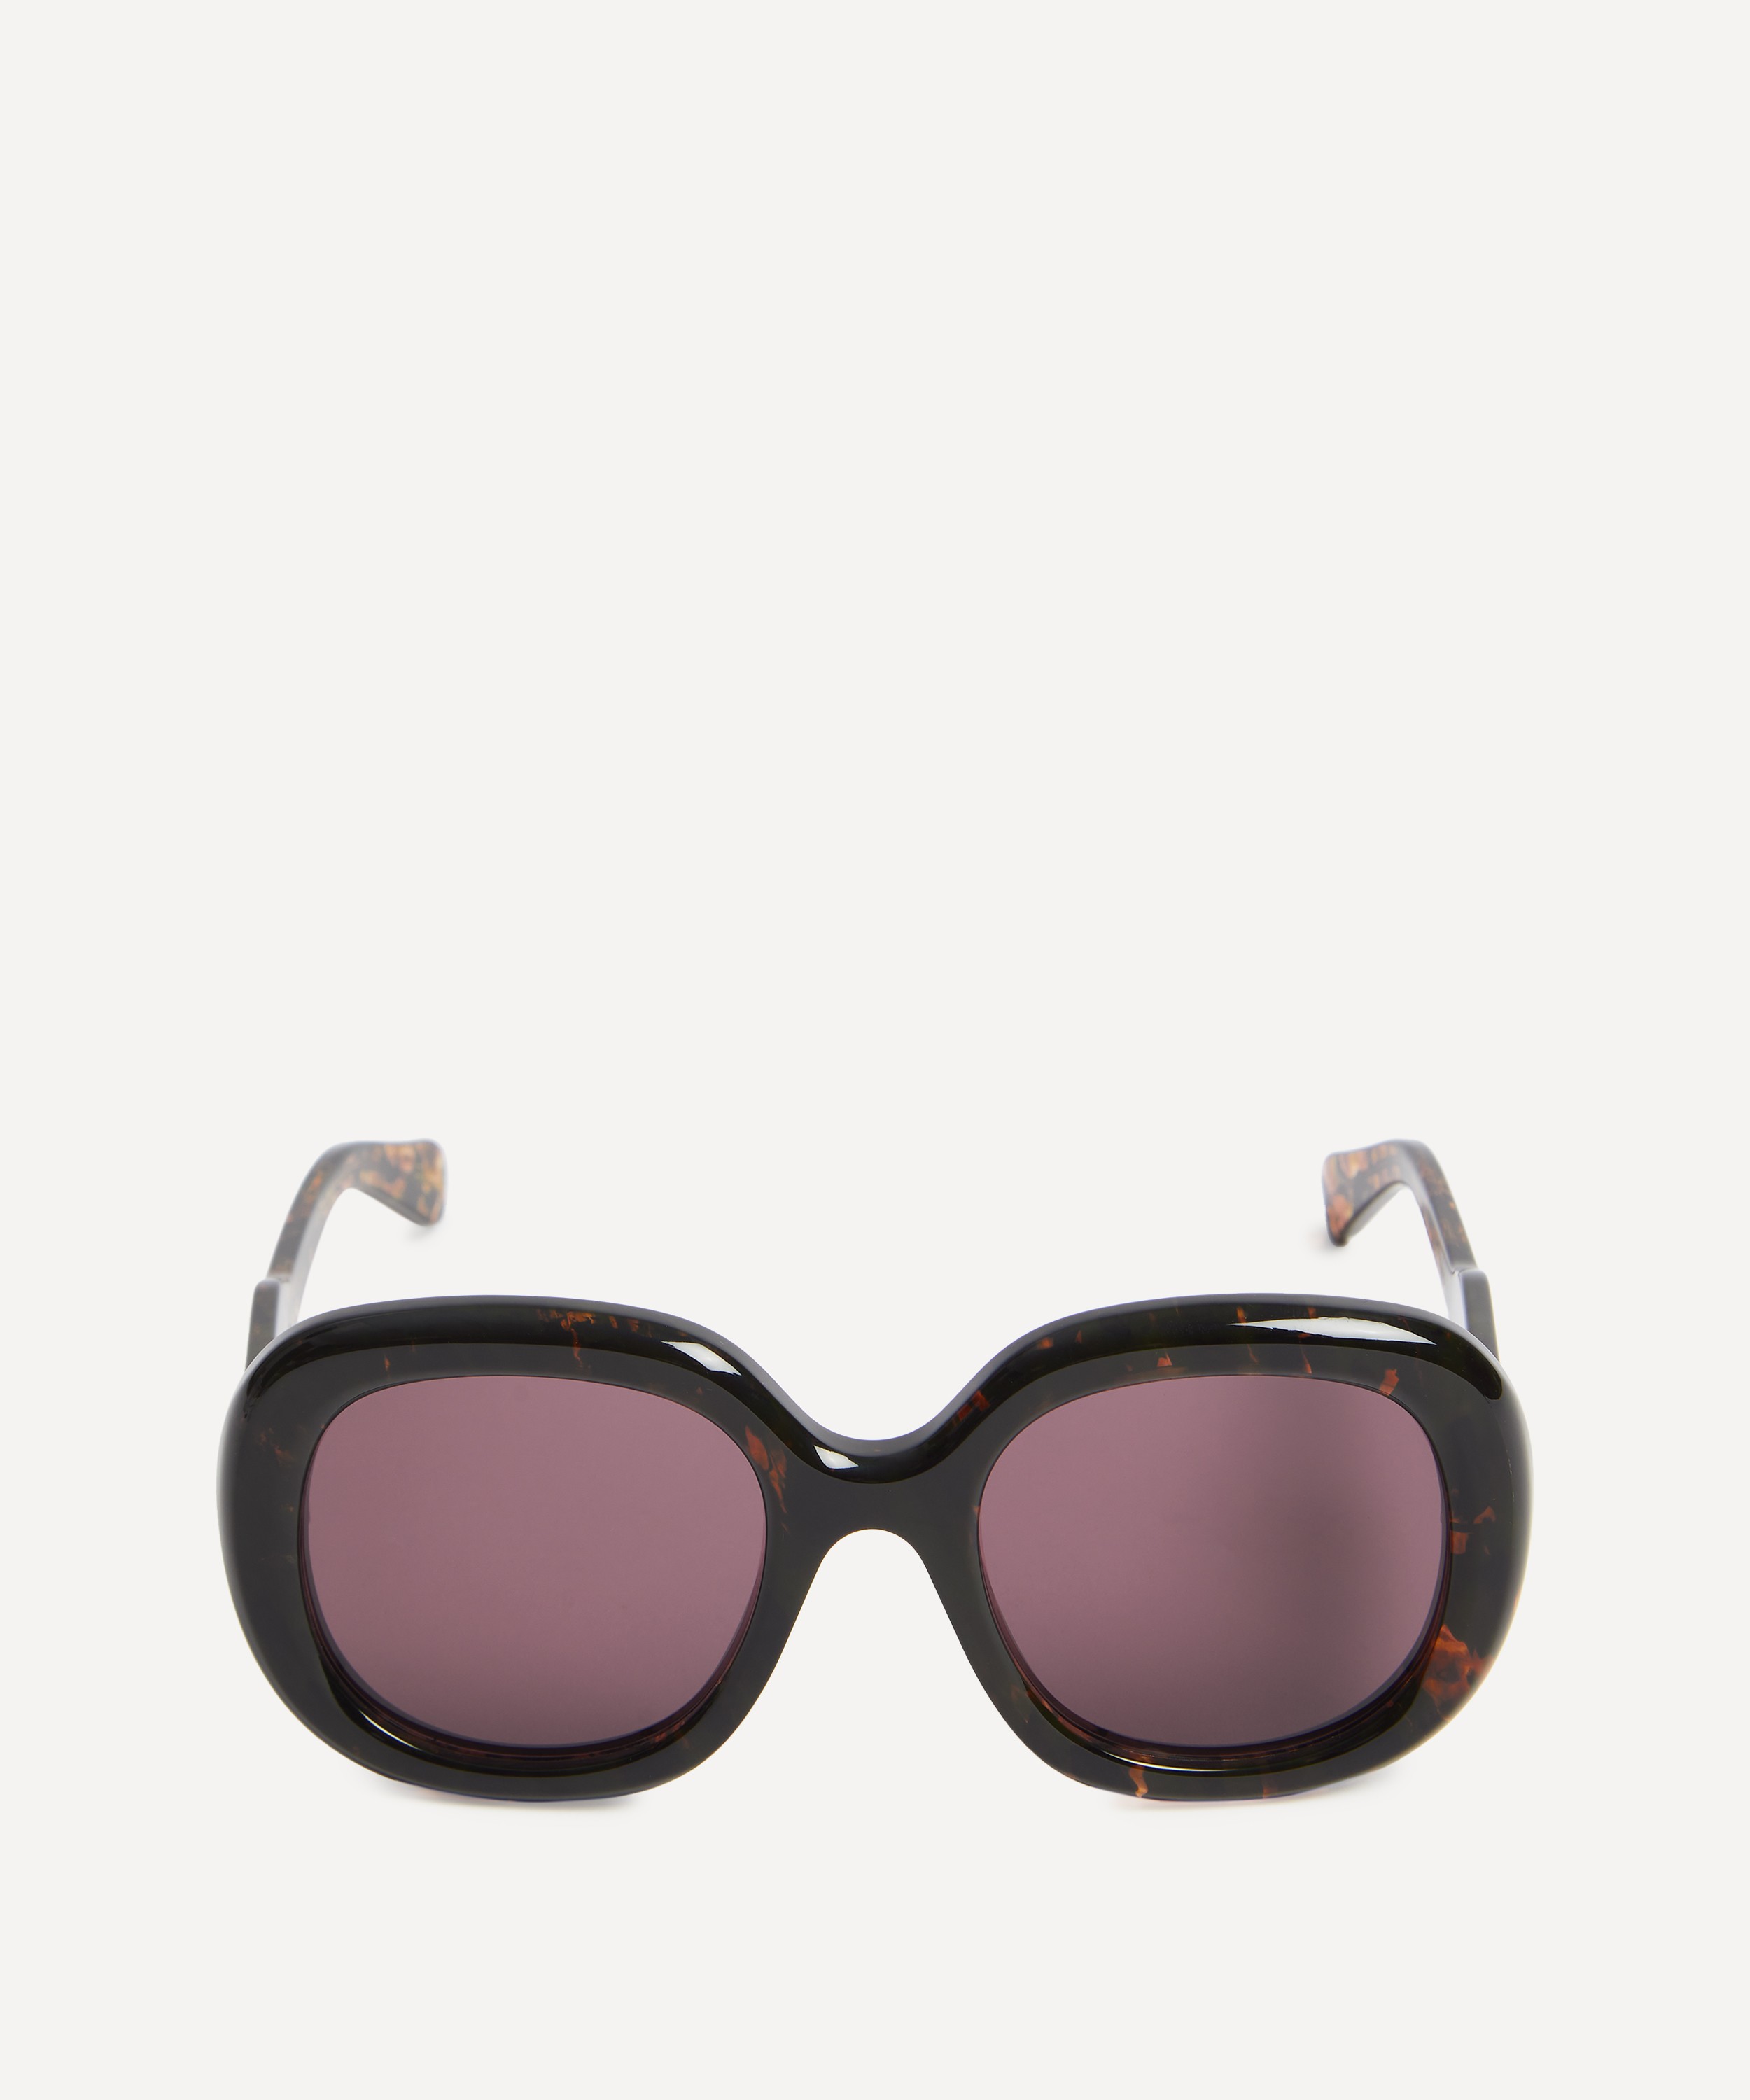 Chloé - Round Sunglasses